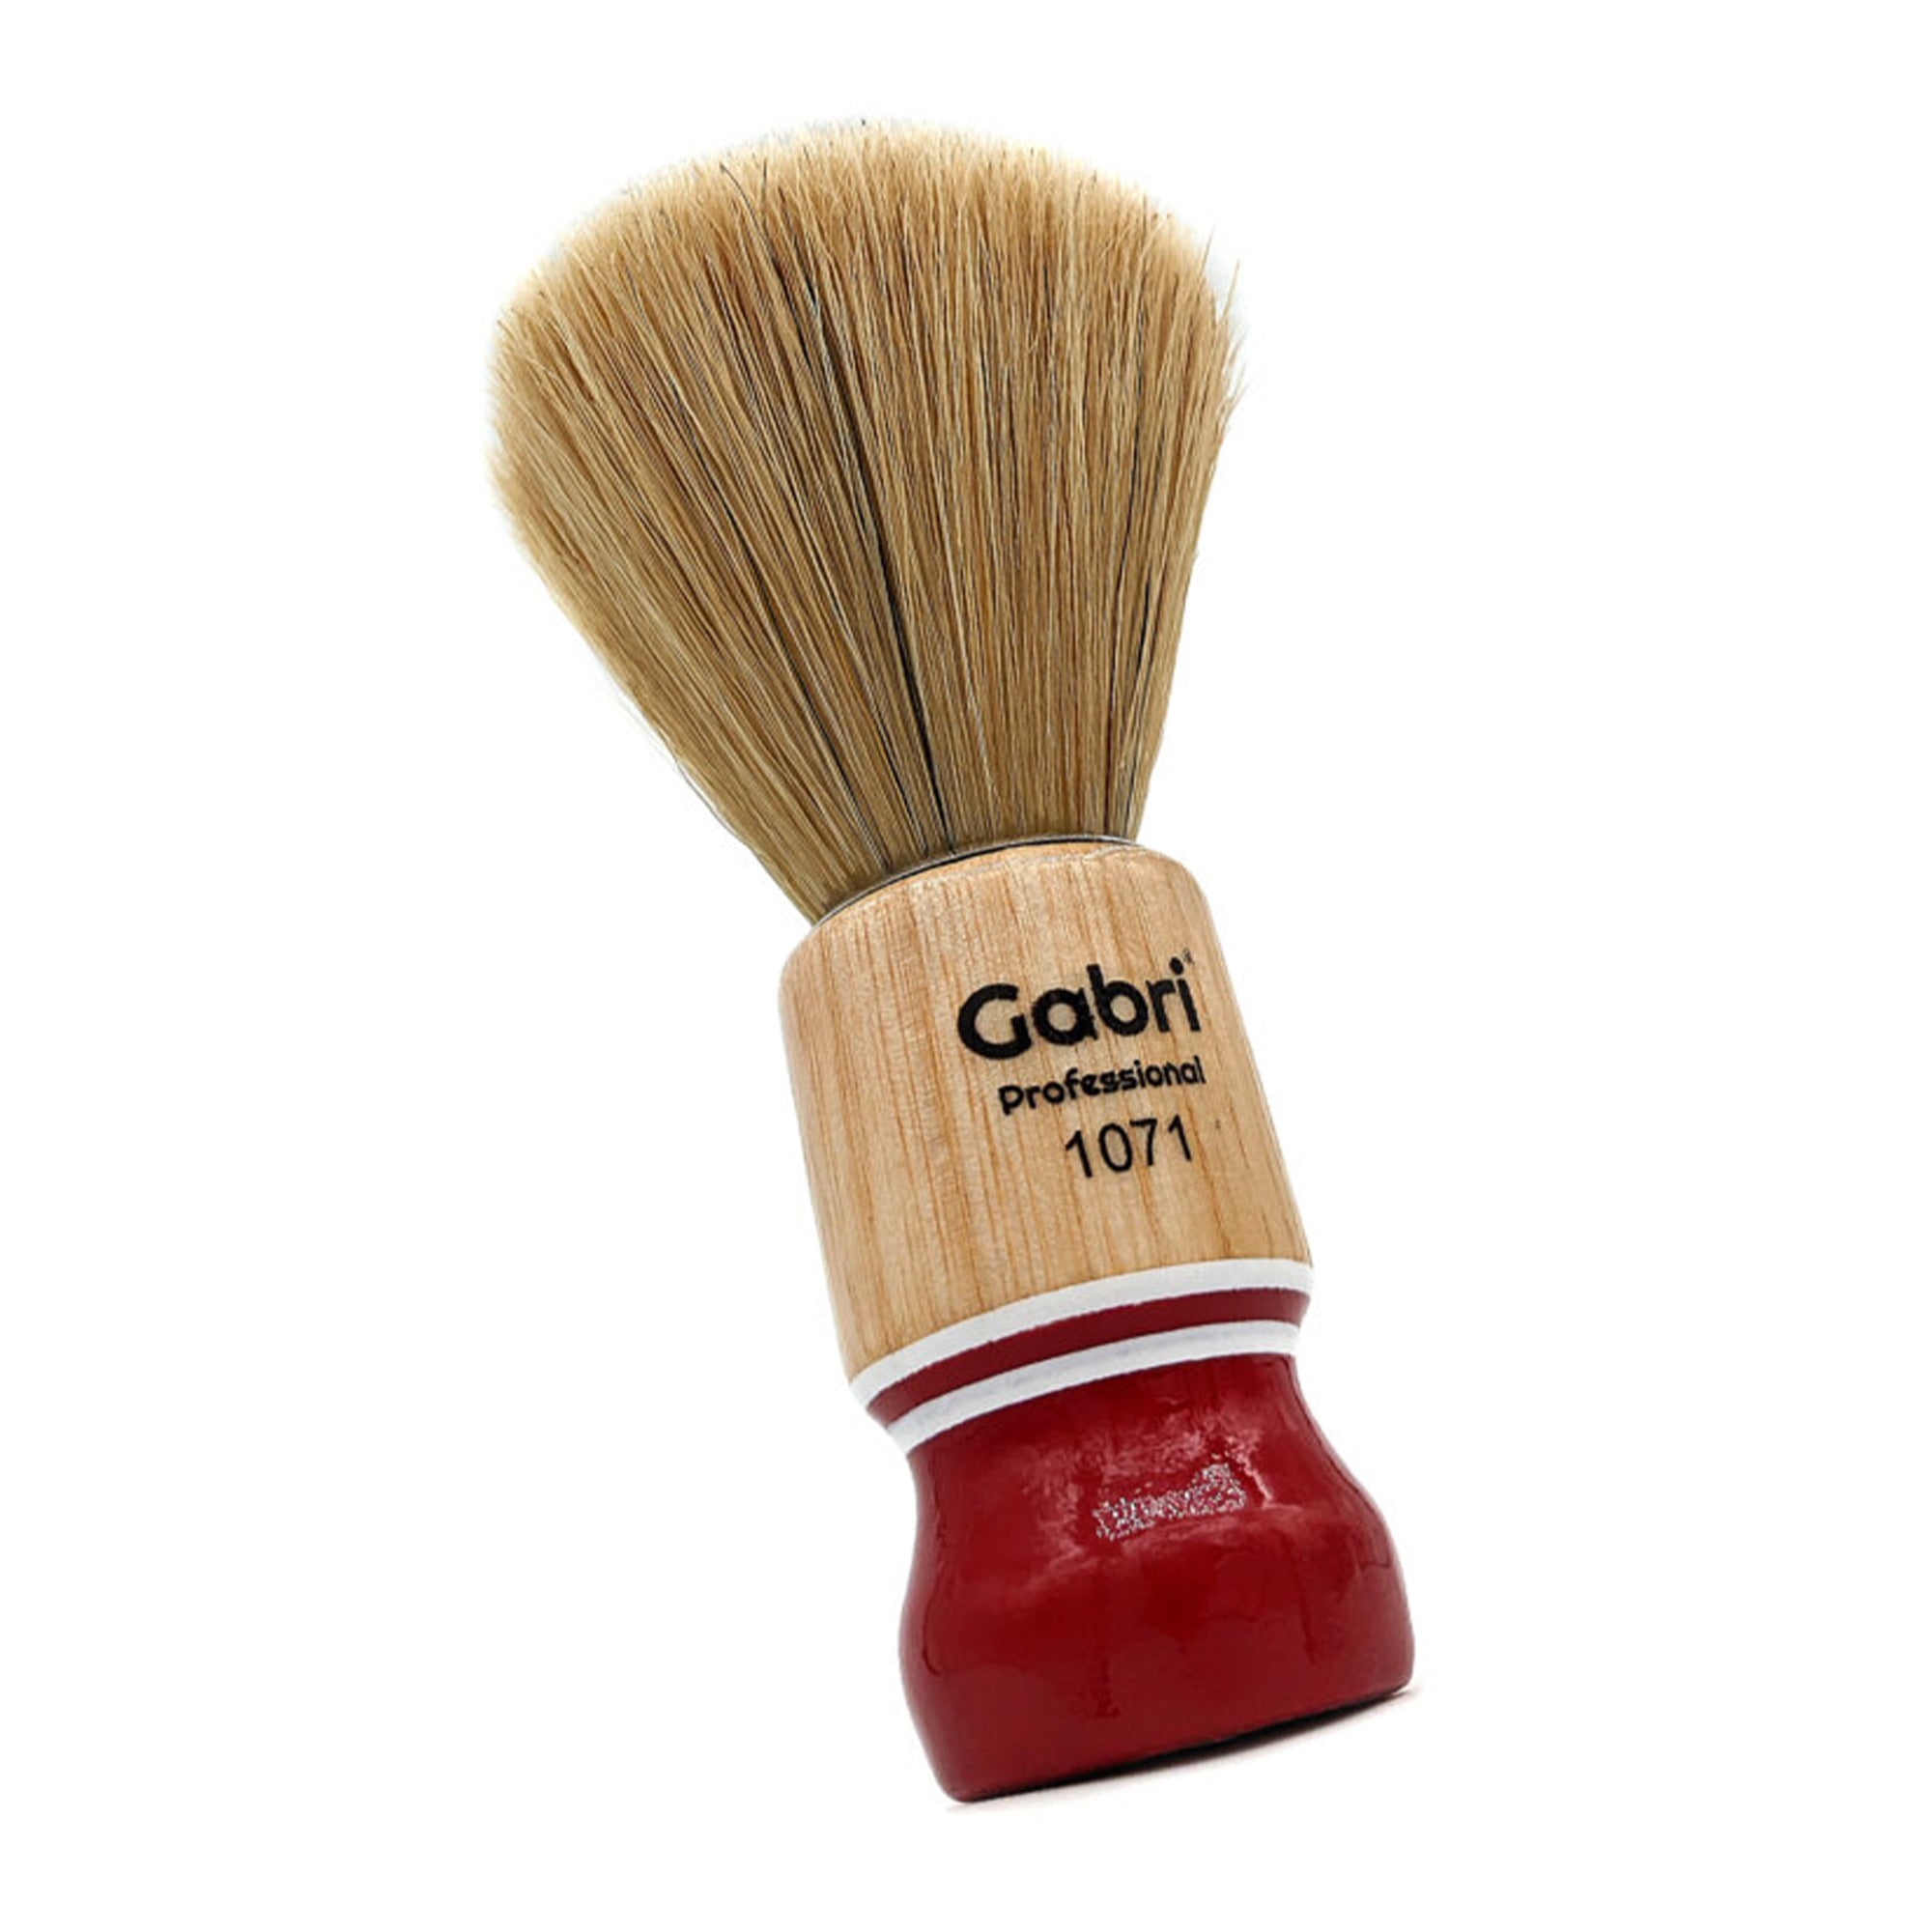 Gabri - Shaving Brush Authentic Wooden Hand Made 1071 13.5cm (Red)